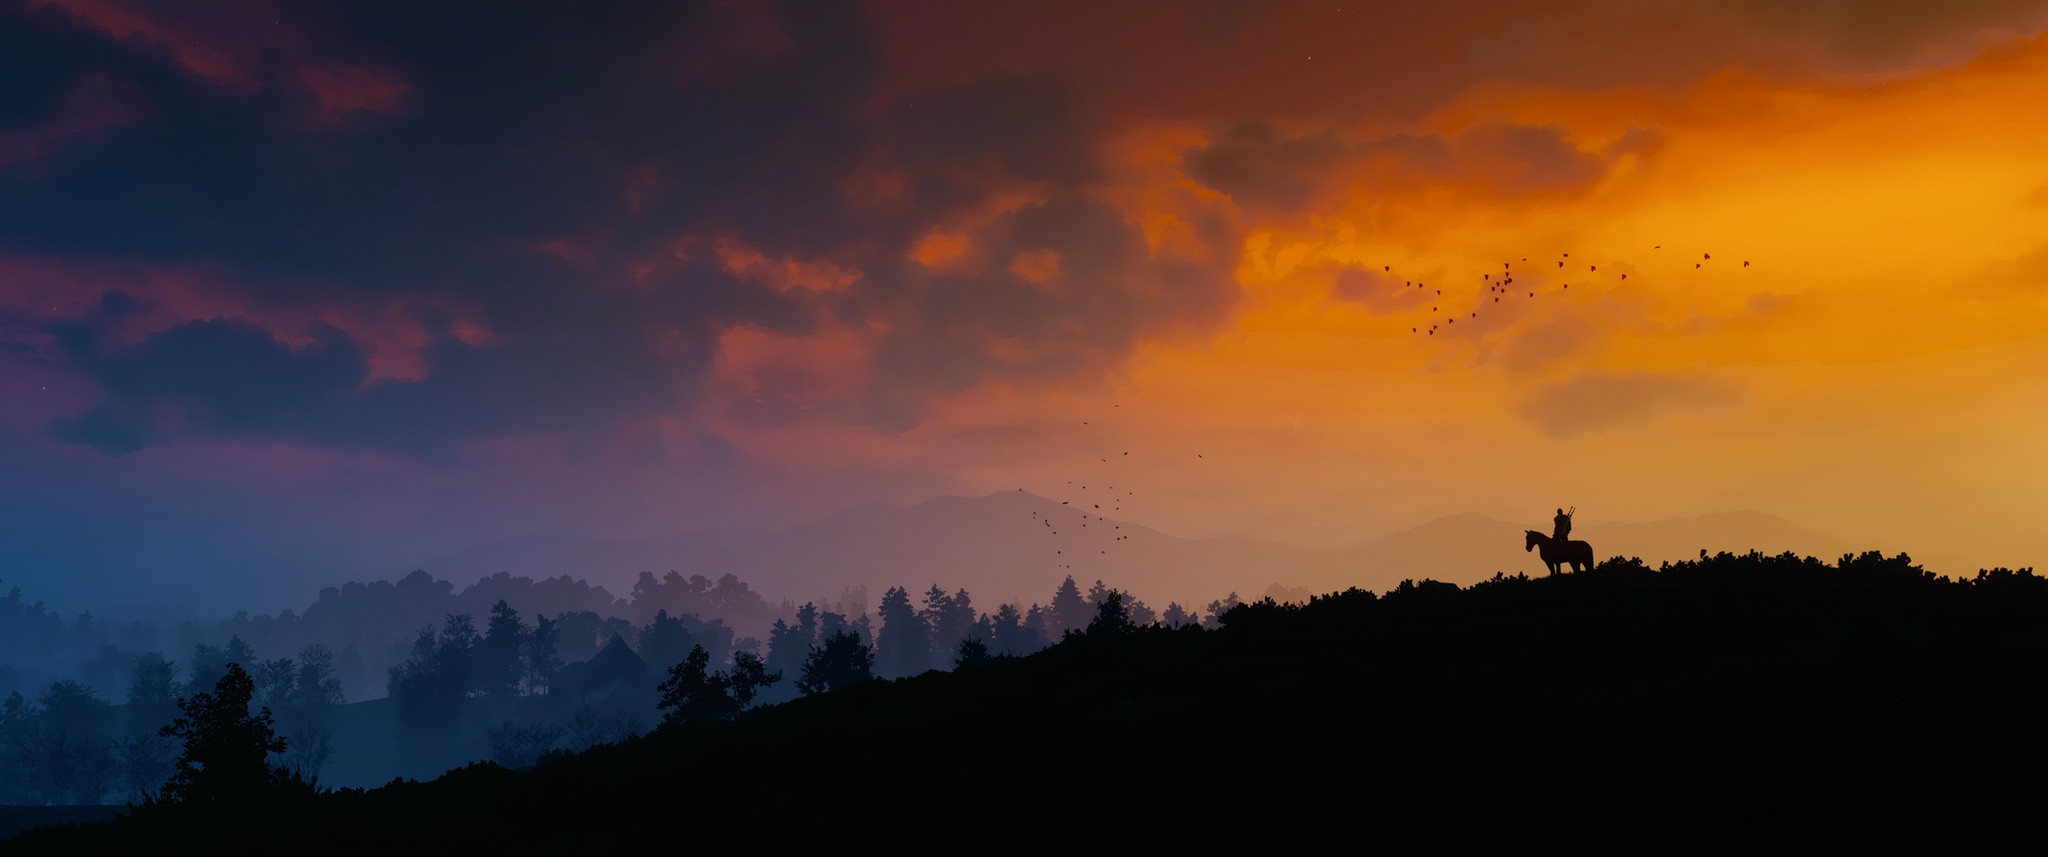 The Witcher 3: Wild Hunt, Landscape, Sunset Wallpaper